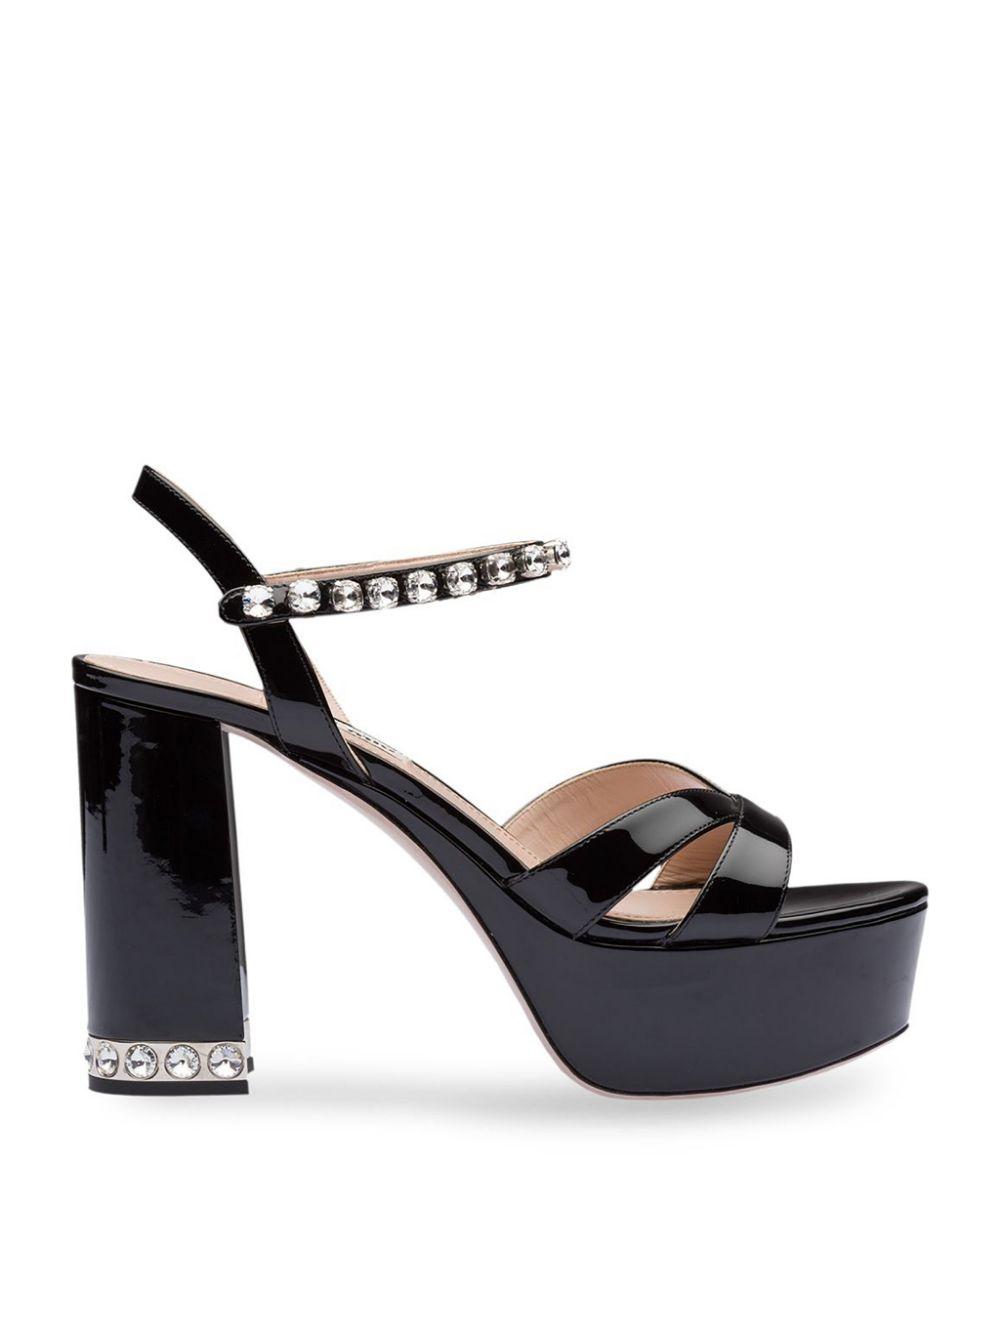 Miu Miu Leather Crystal Embellished Platform Sandals in Black | Lyst